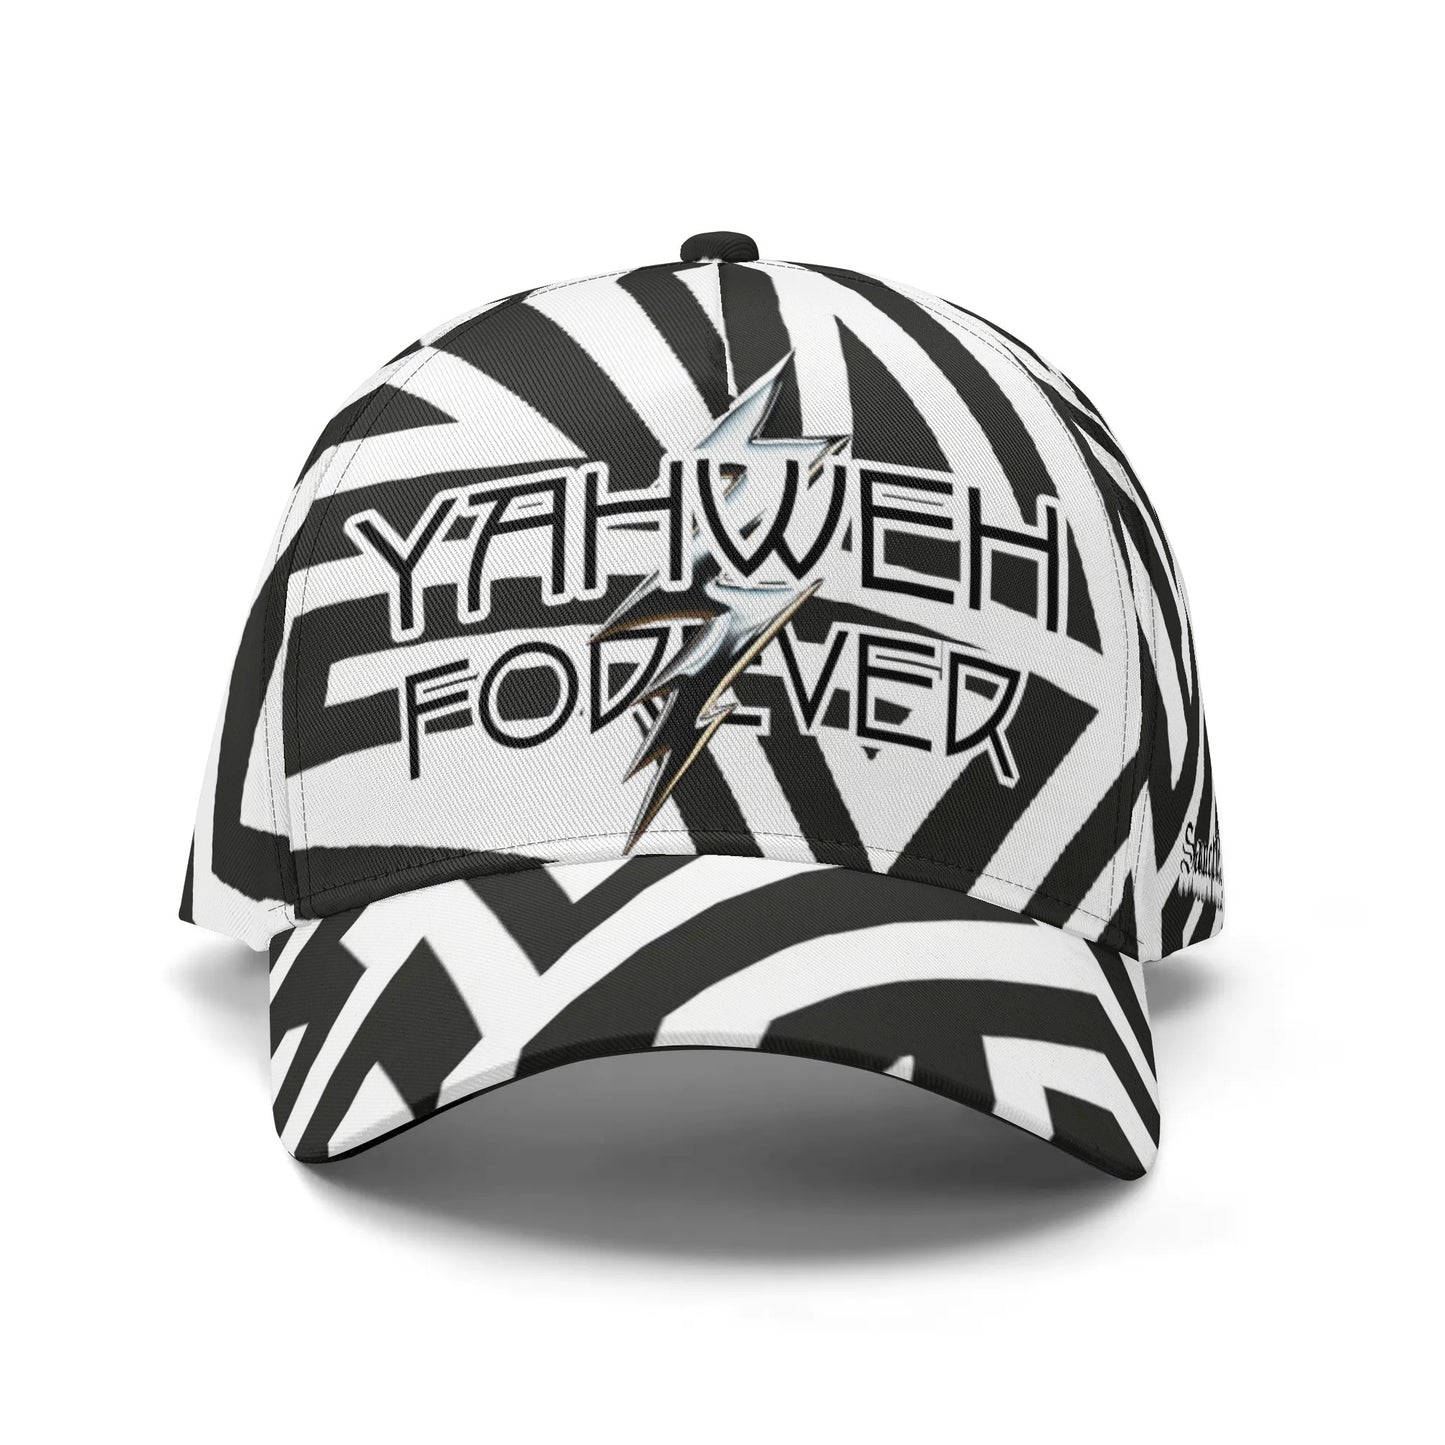 YAHWEH FOREVER- All-over Print Baseball Cap